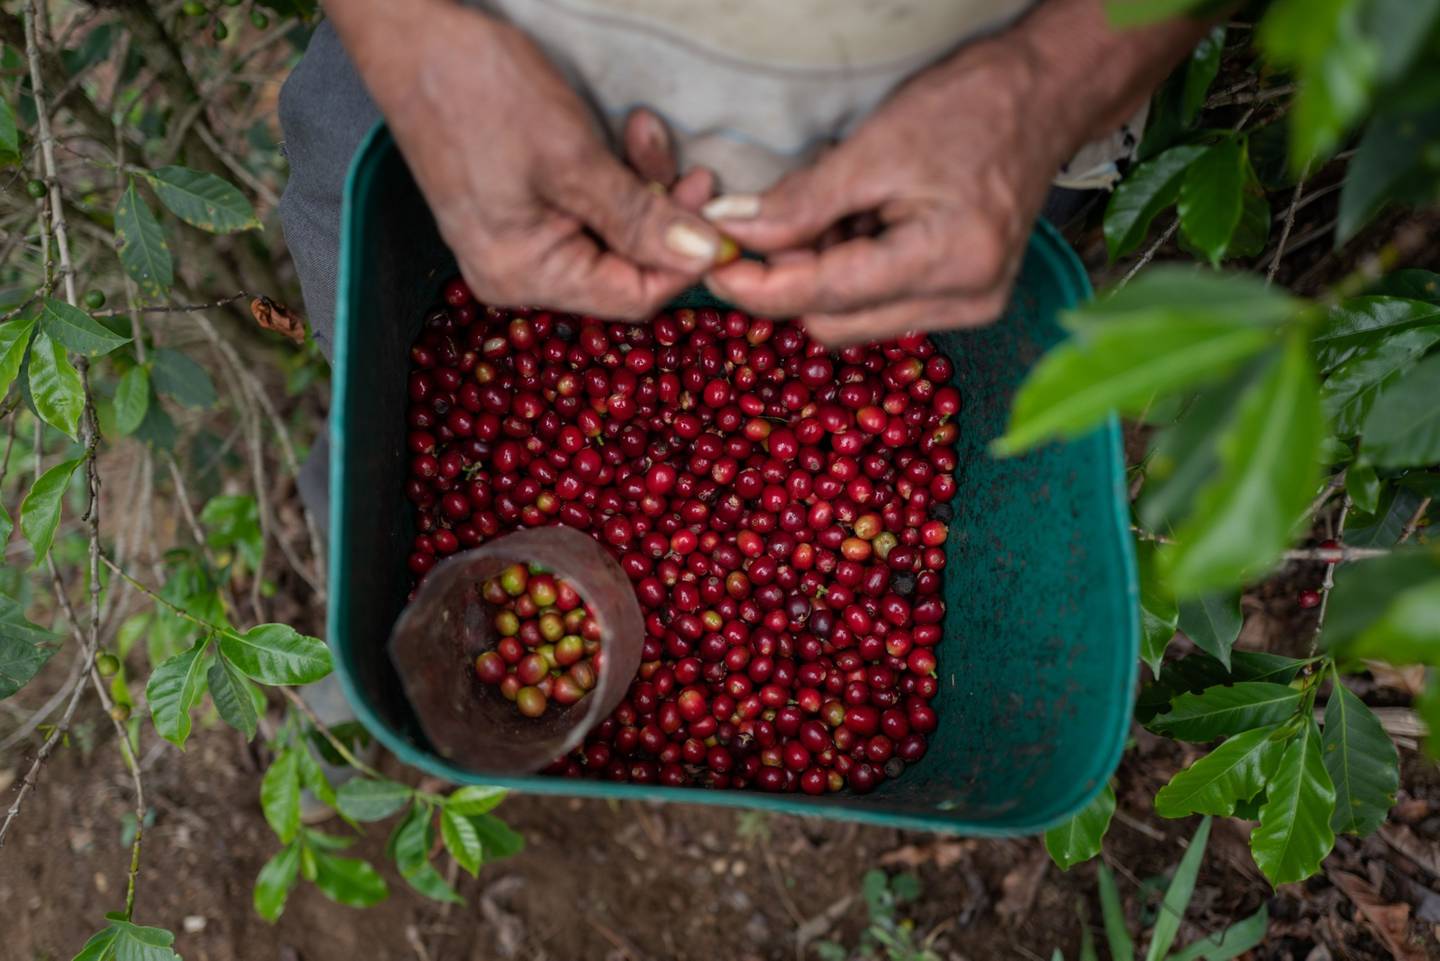 Granos de café recogidos a mano durante la cosecha. Fotógrafo: Juan Cristobal Cobo / Bloomberg